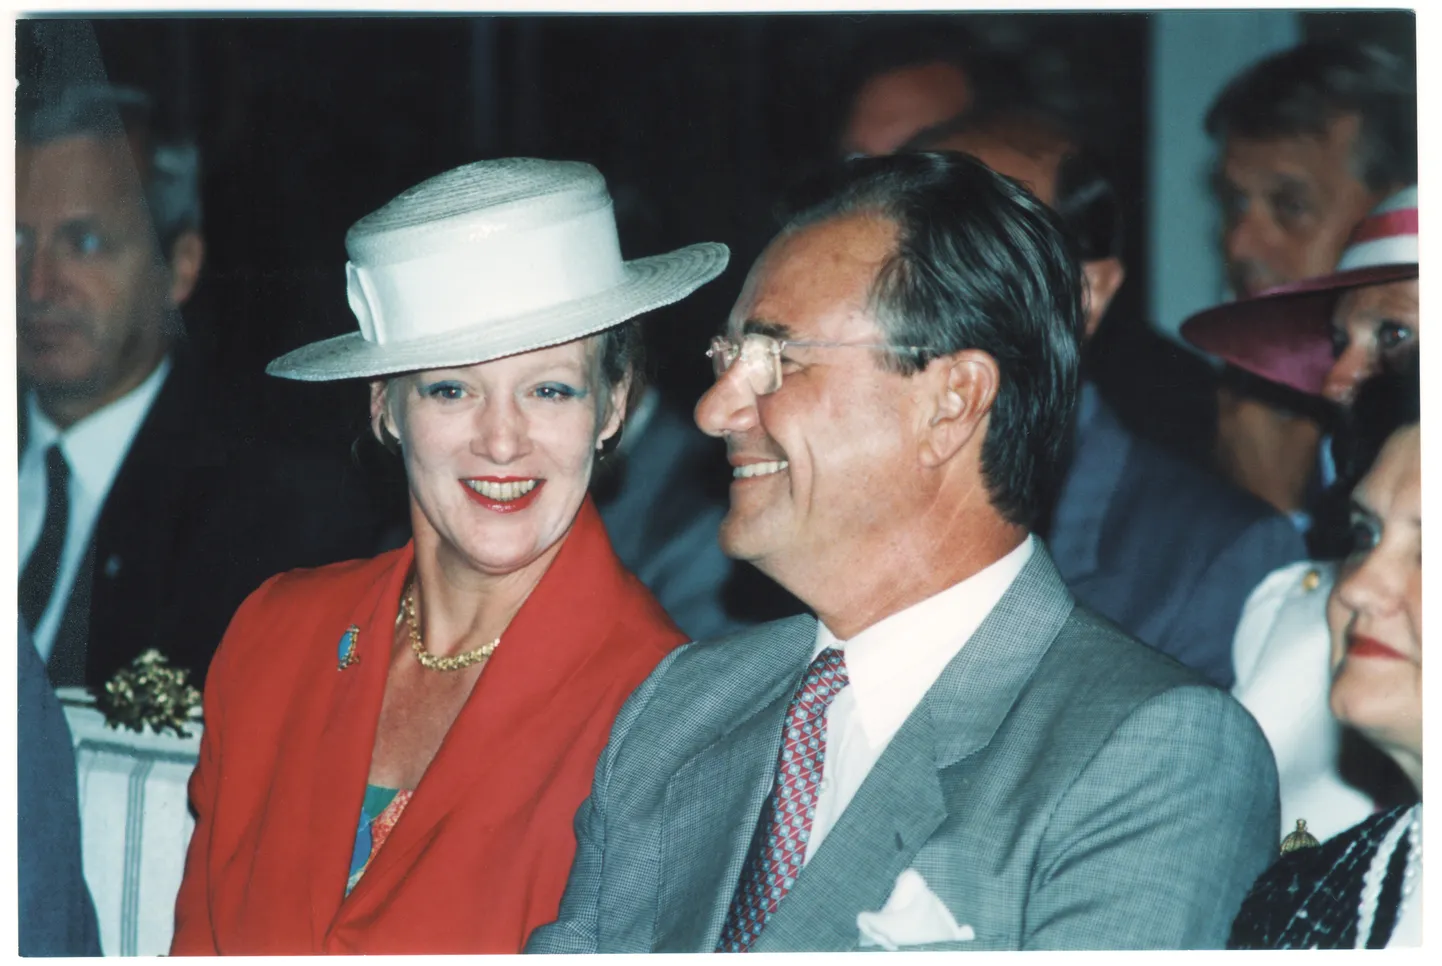 HRH Margrethe II ja Prins Henrik 1992 ajalookonverentsil.